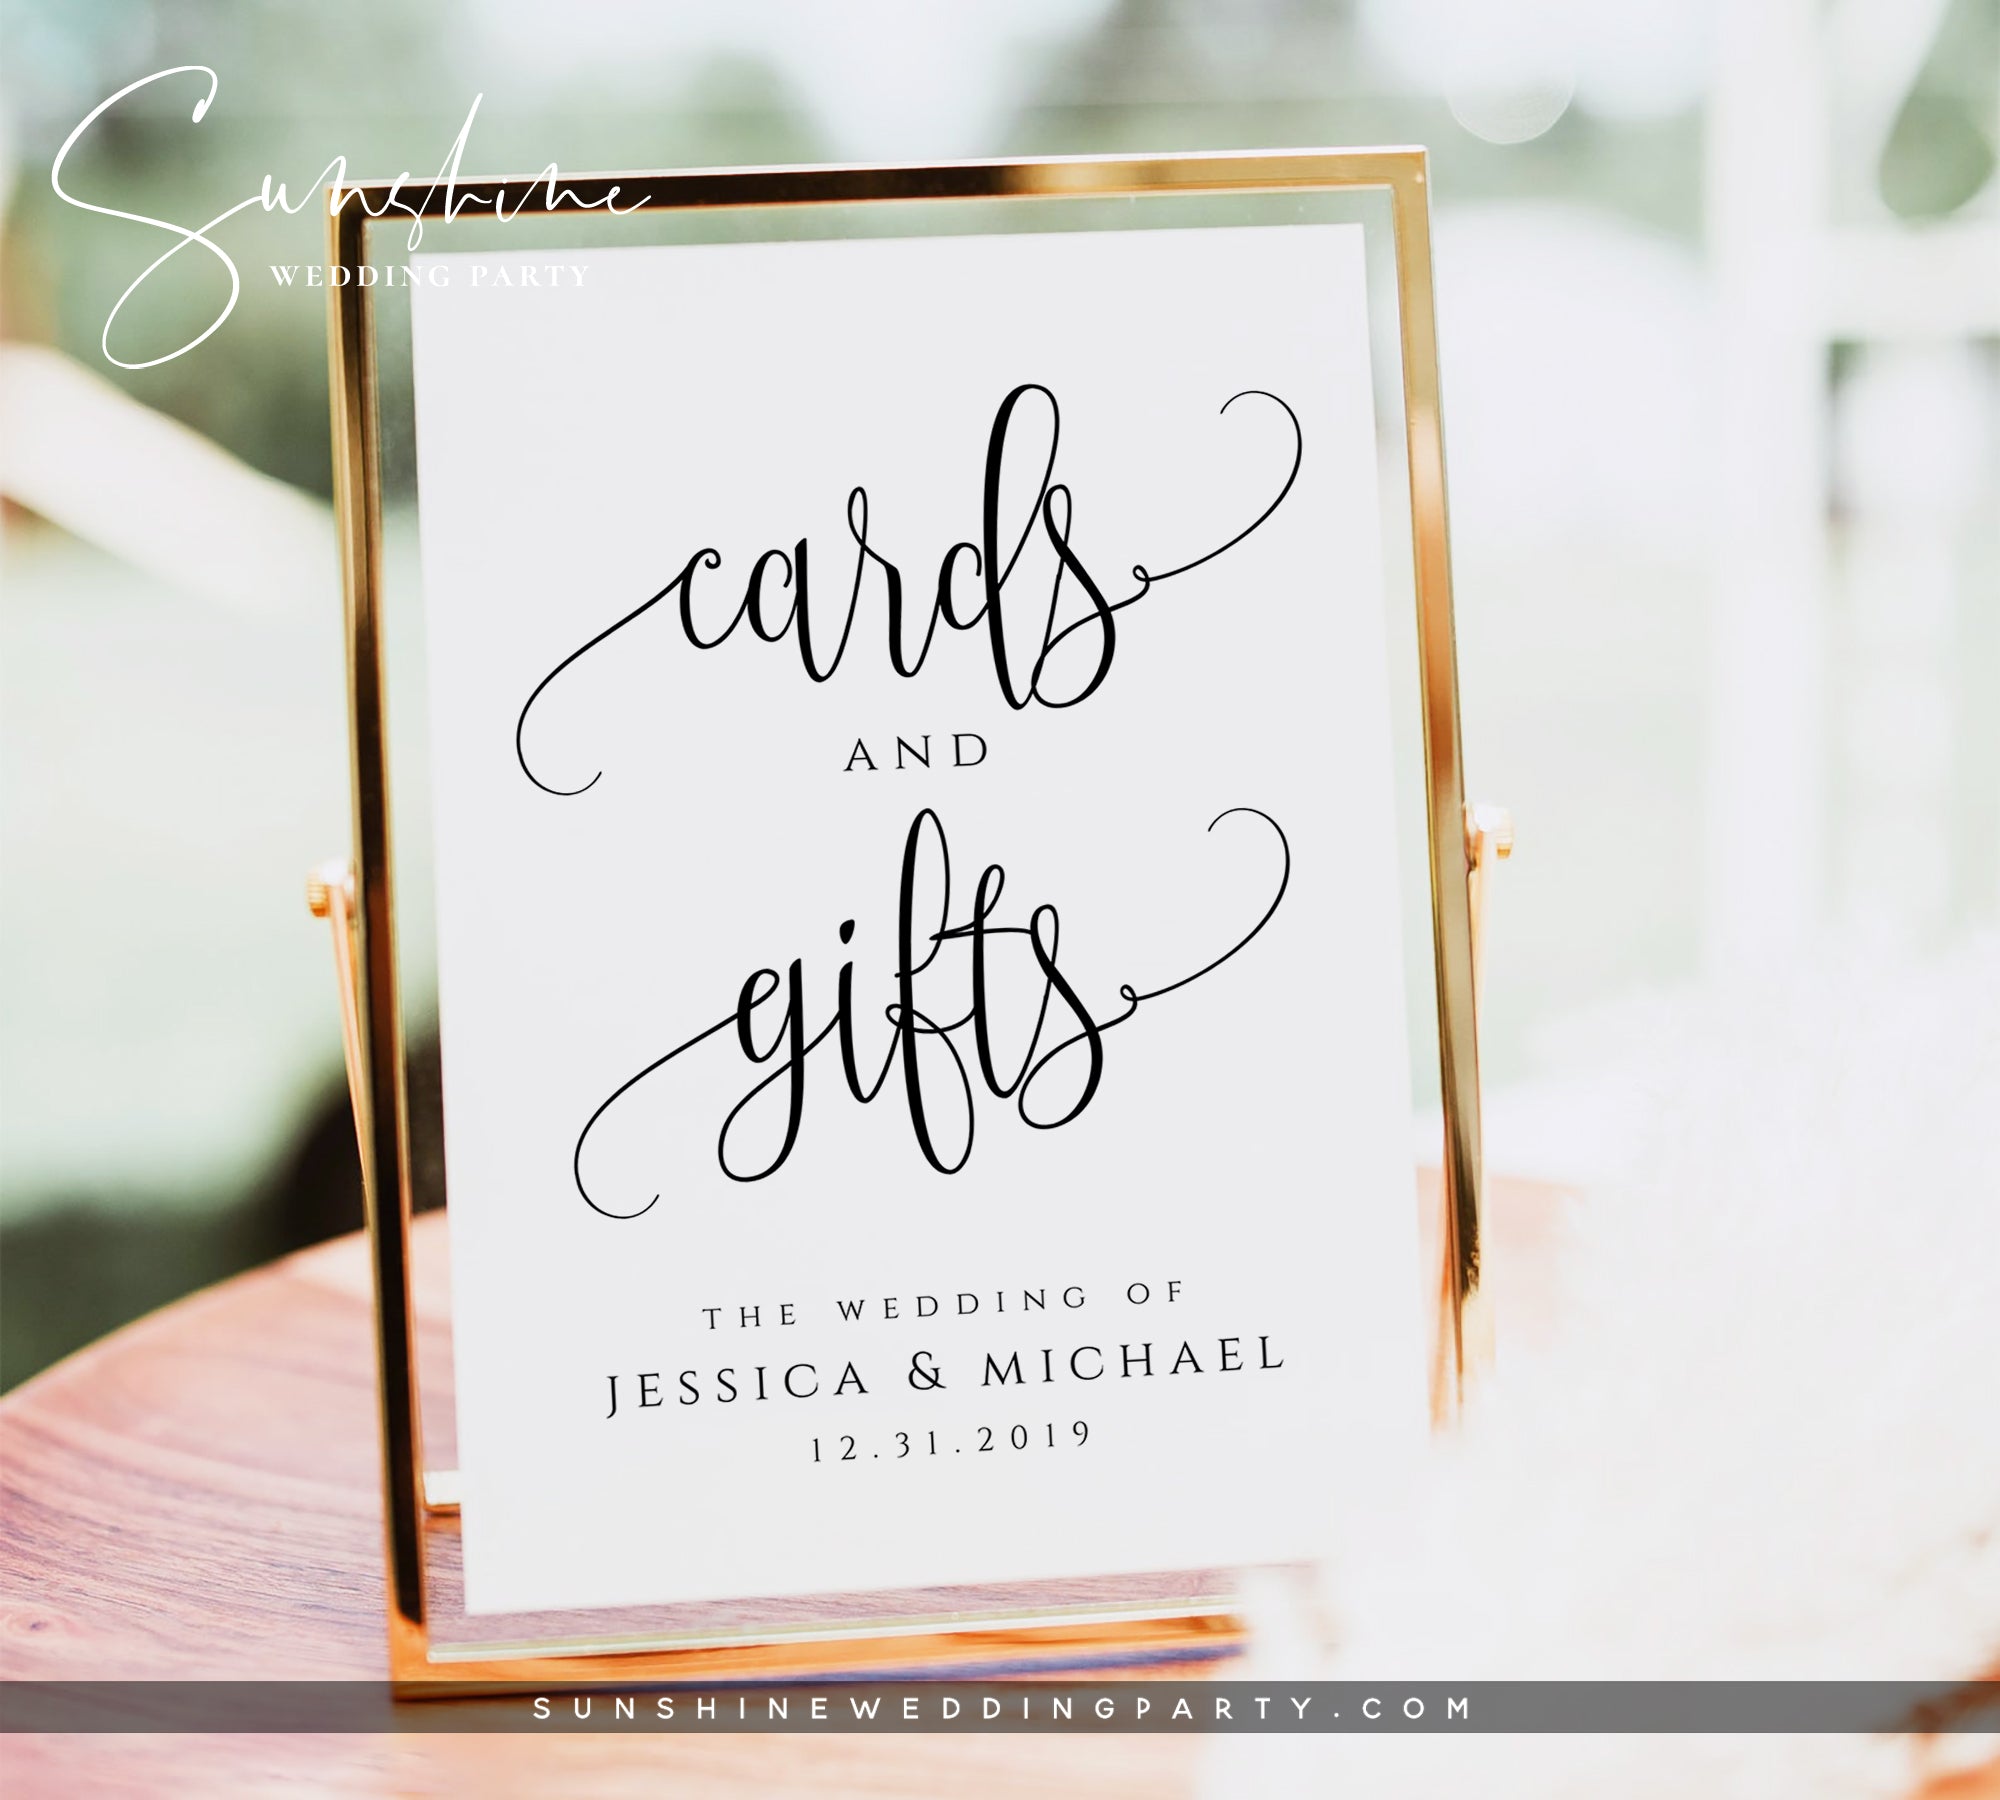 Best Gift Card Vouchers for Wedding, Engagement, Anniversary